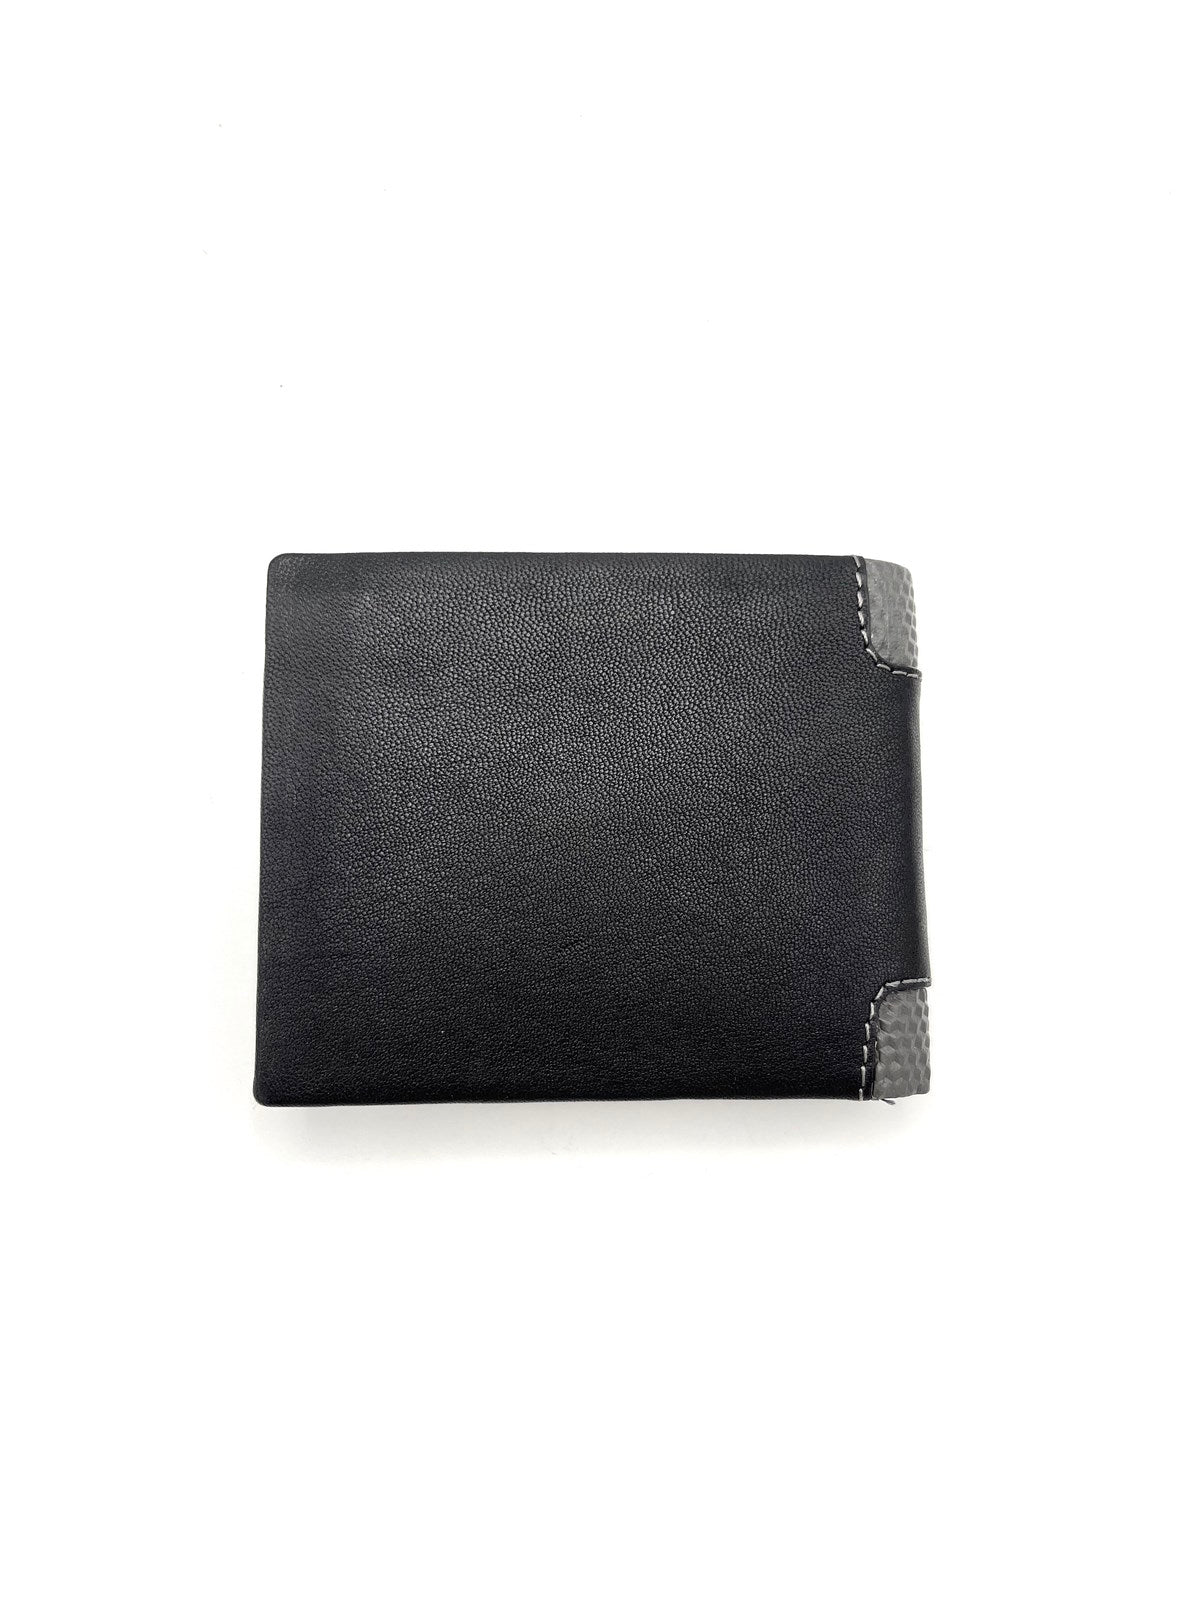 Brand Jaguar, Genuine leather wallet, for men, art. PF745-9.062